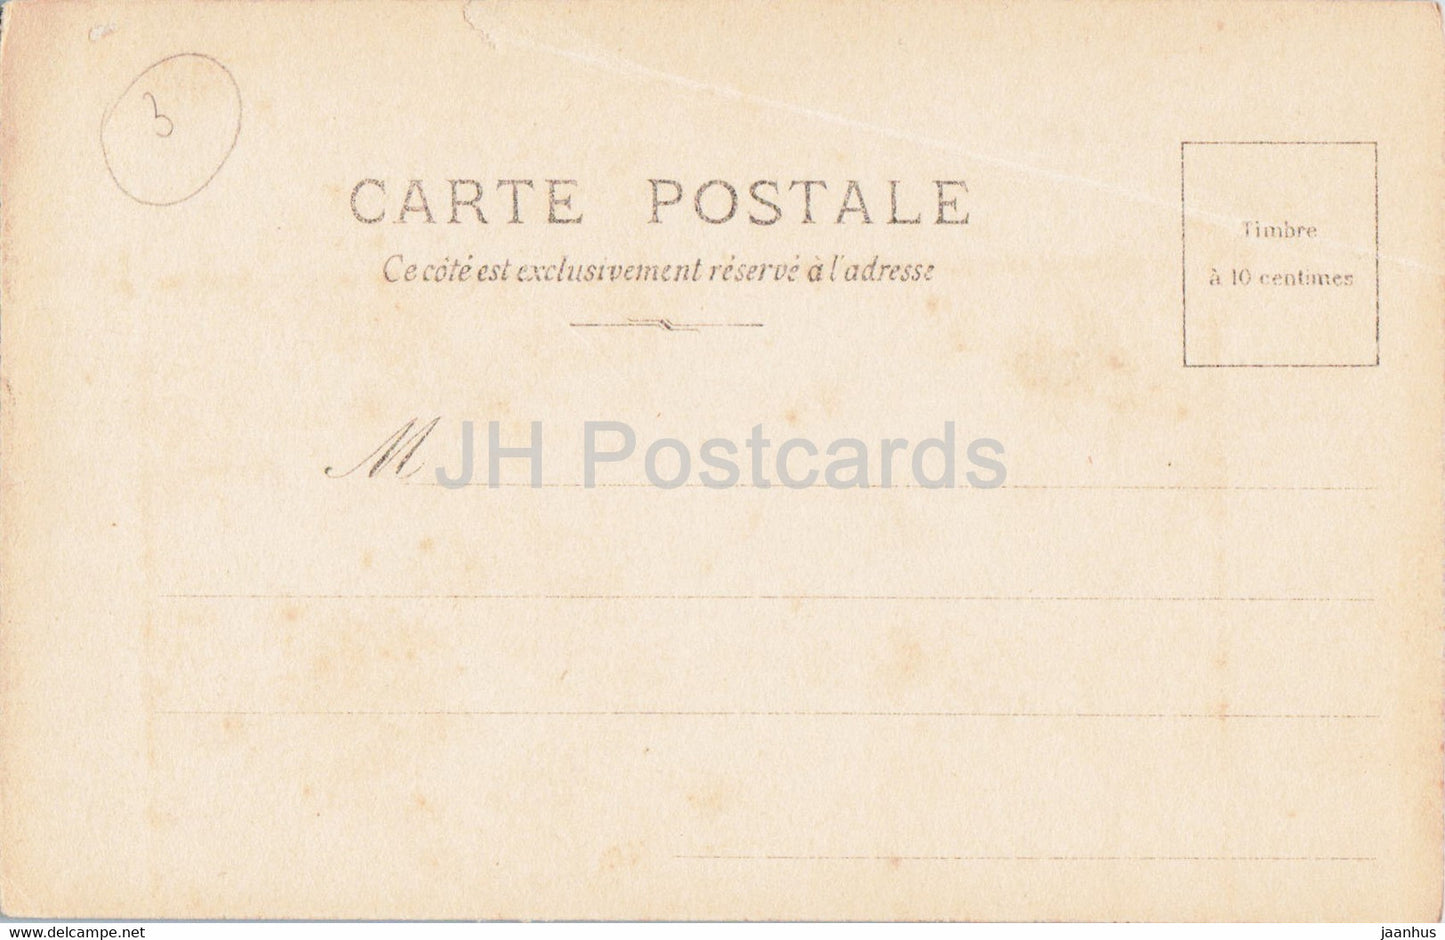 Ostergrußkarte - Souvenir de Paques - SIP - 20 - alte Postkarte - Frankreich - unbenutzt